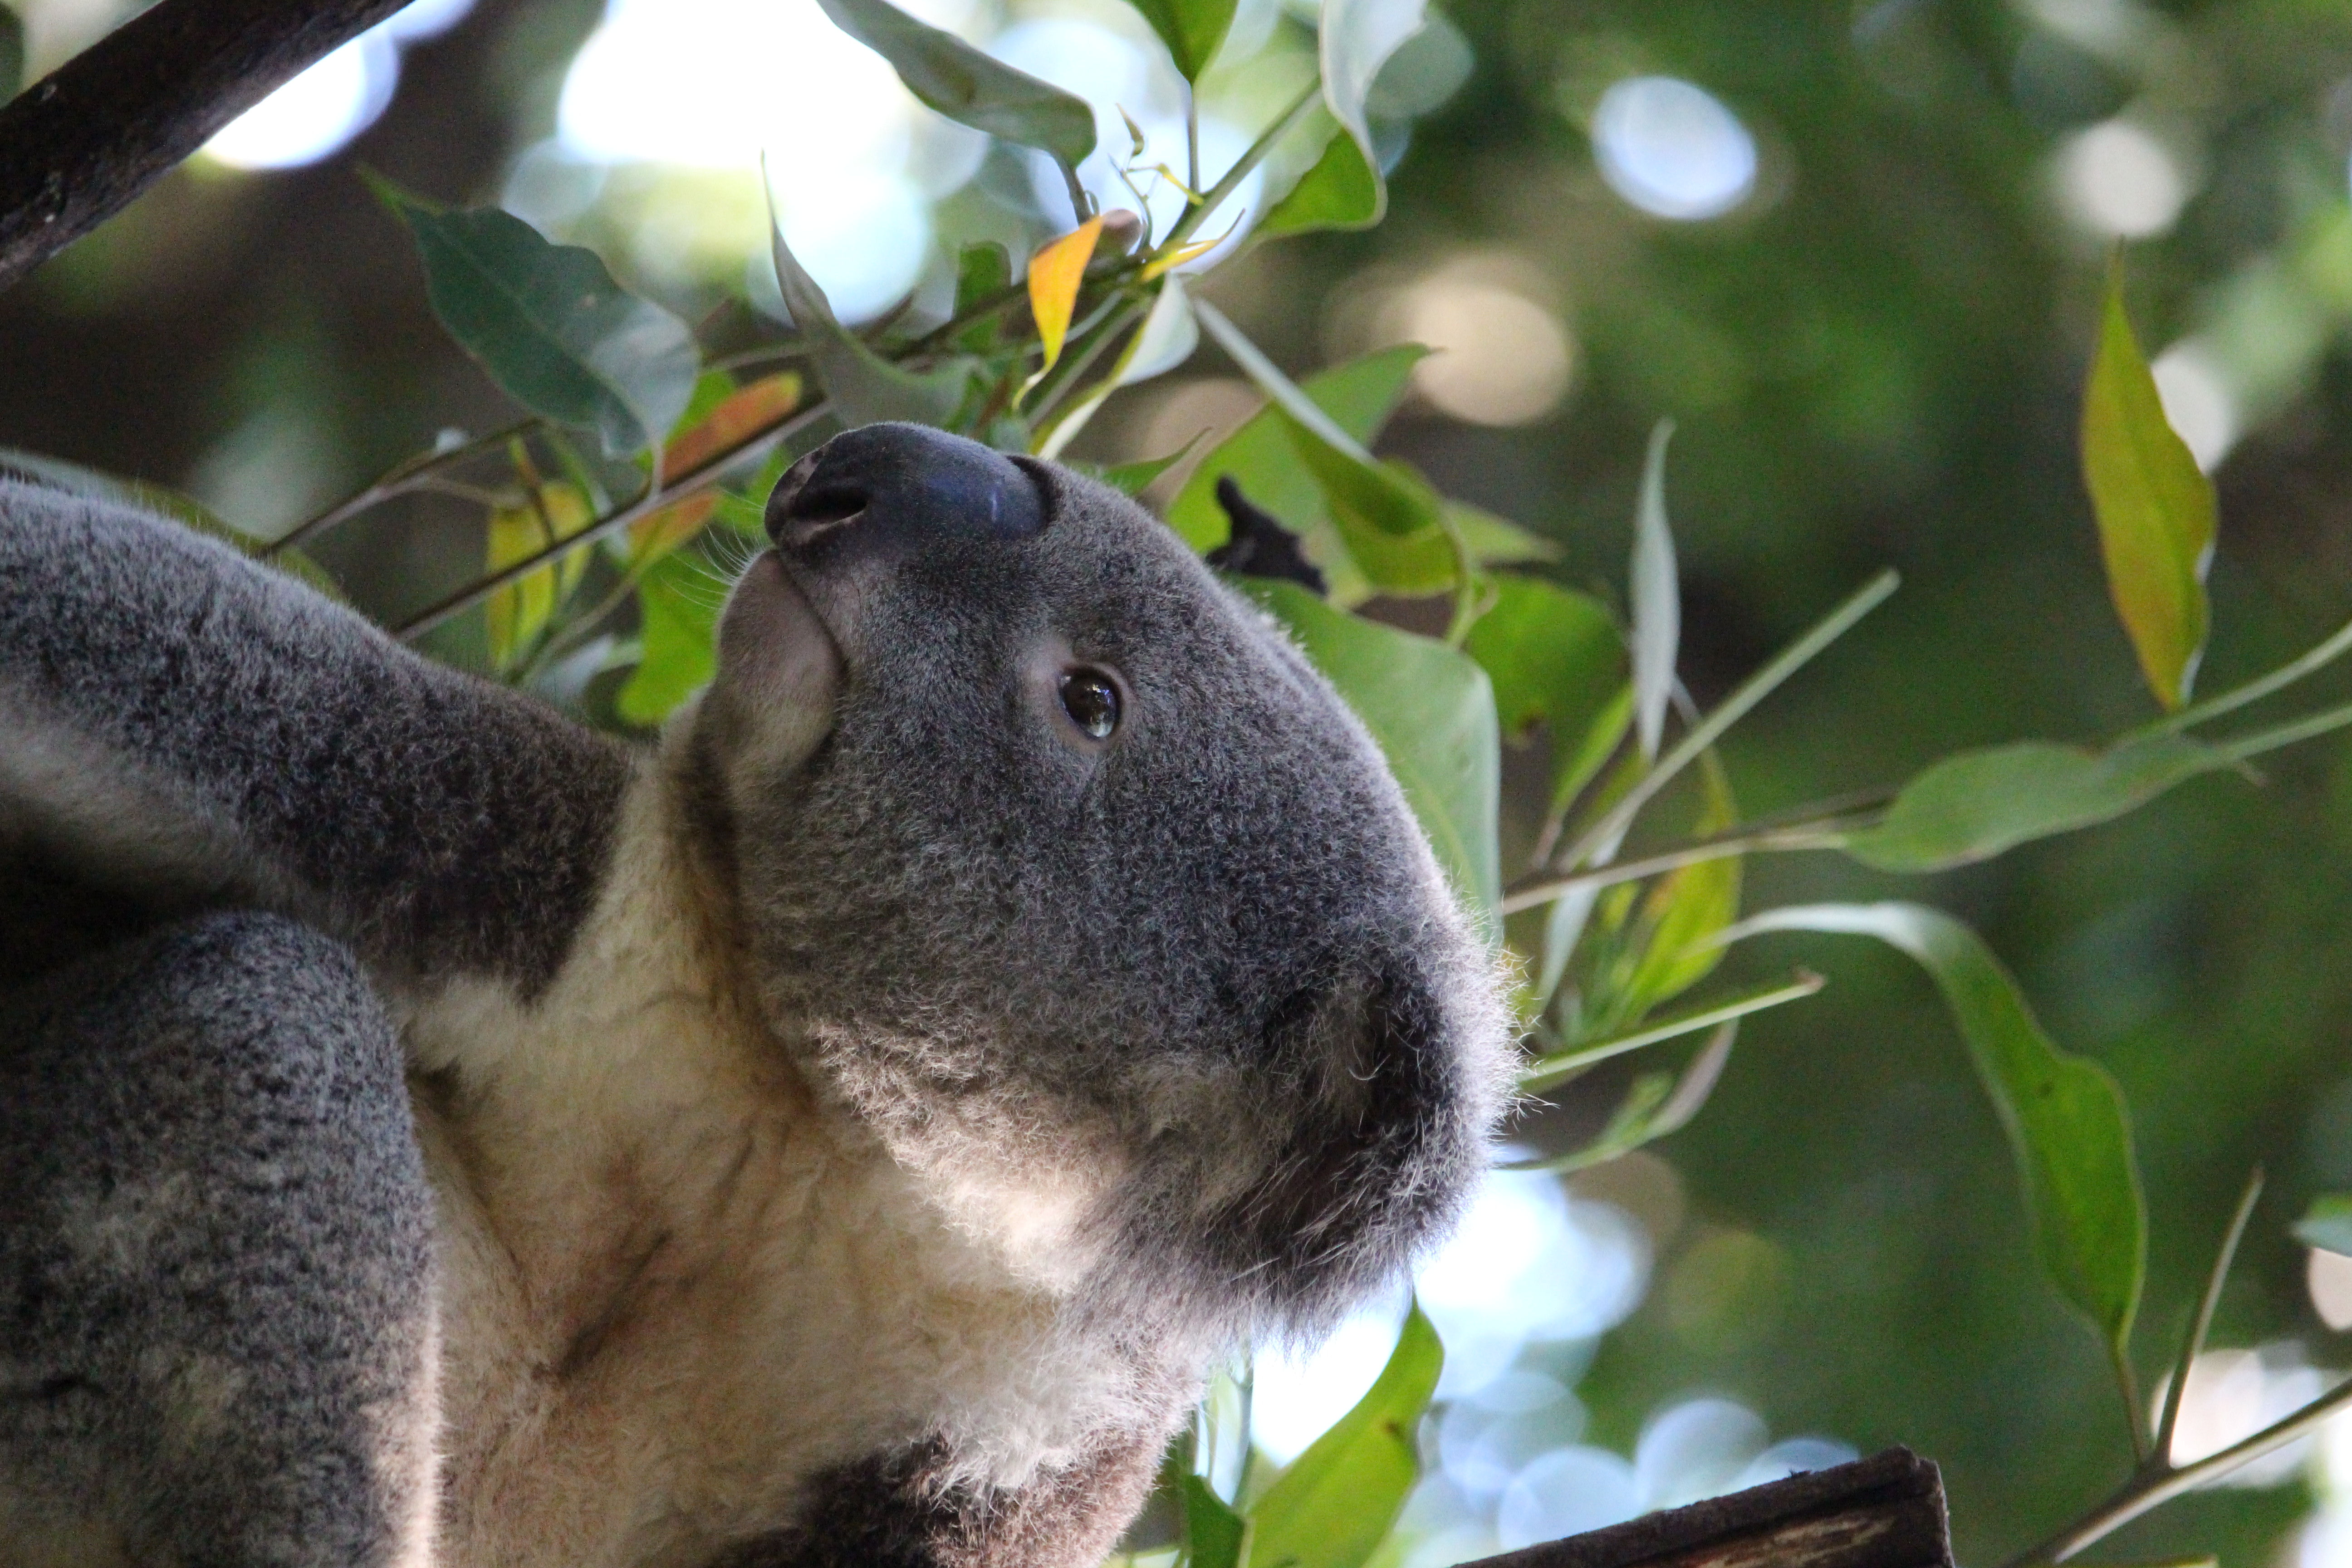 Friends of the Koala - Adopt a koala